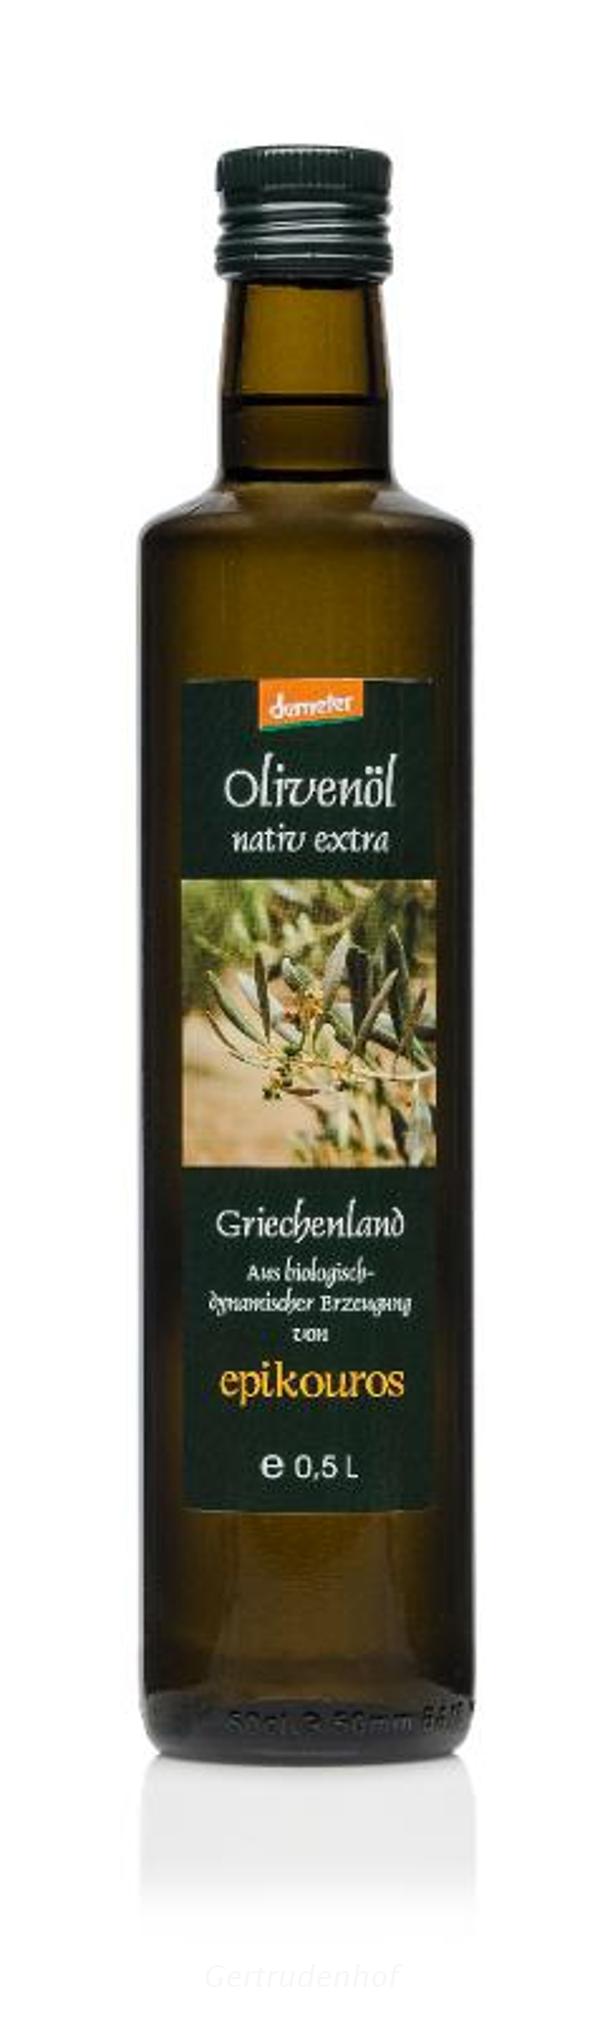 Produktfoto zu Demeter Olivenöl, extra nativ, Epikouros